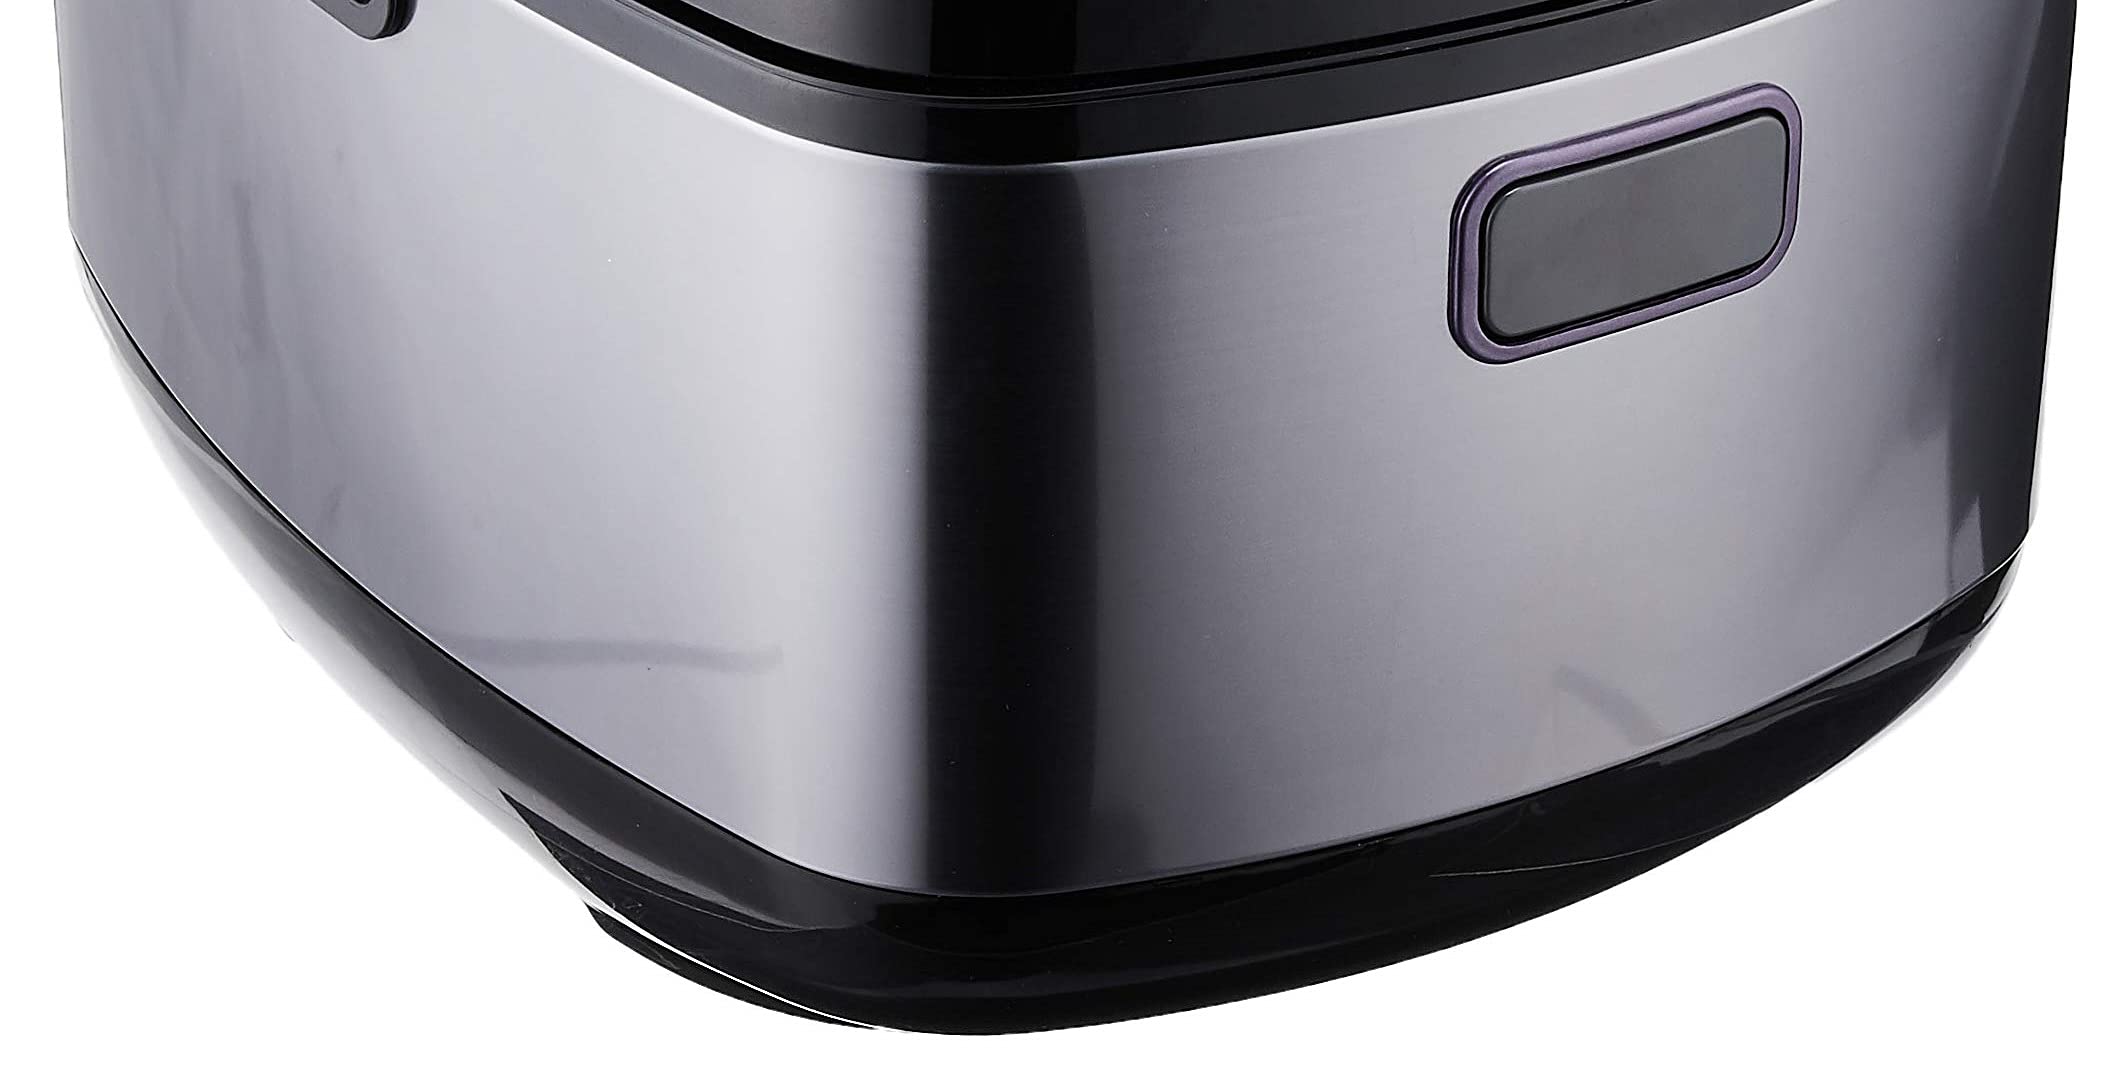 Tefal Home Chef Smart Pro Multicooker CY625, Black